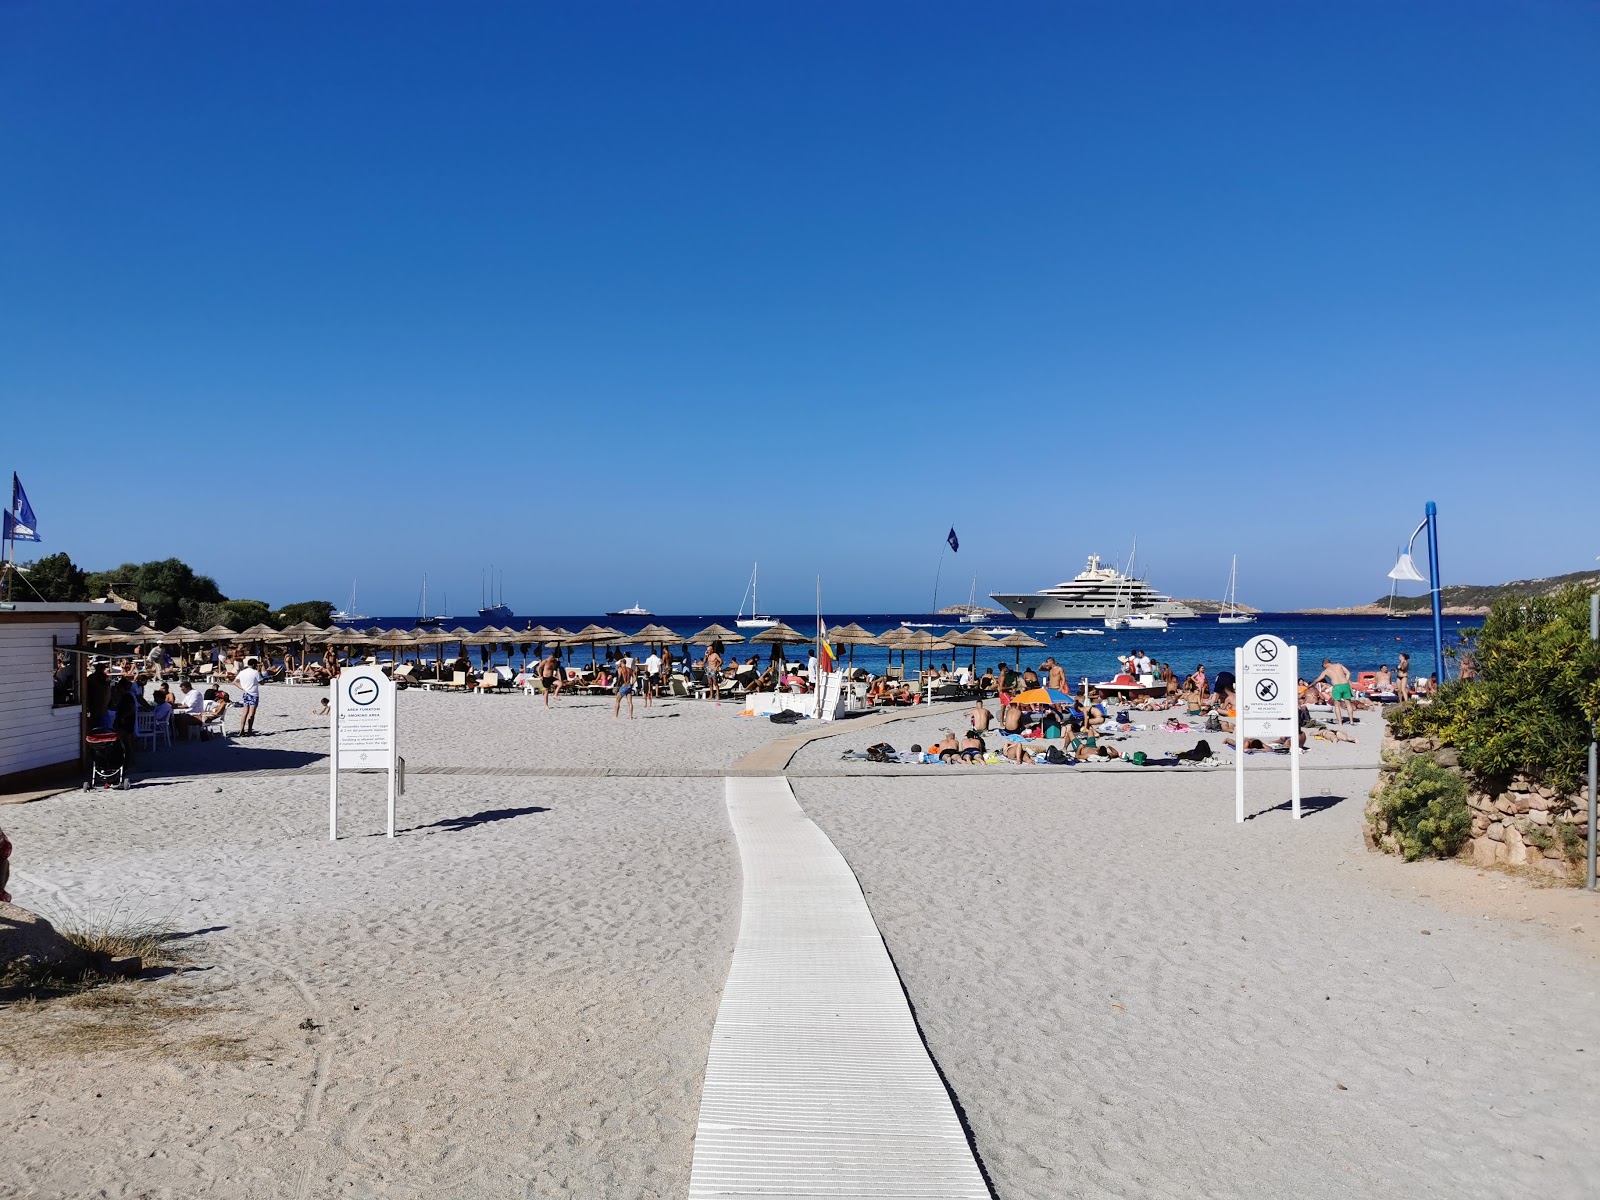 Spiaggia Piccolo Pevero'in fotoğrafı turkuaz saf su yüzey ile